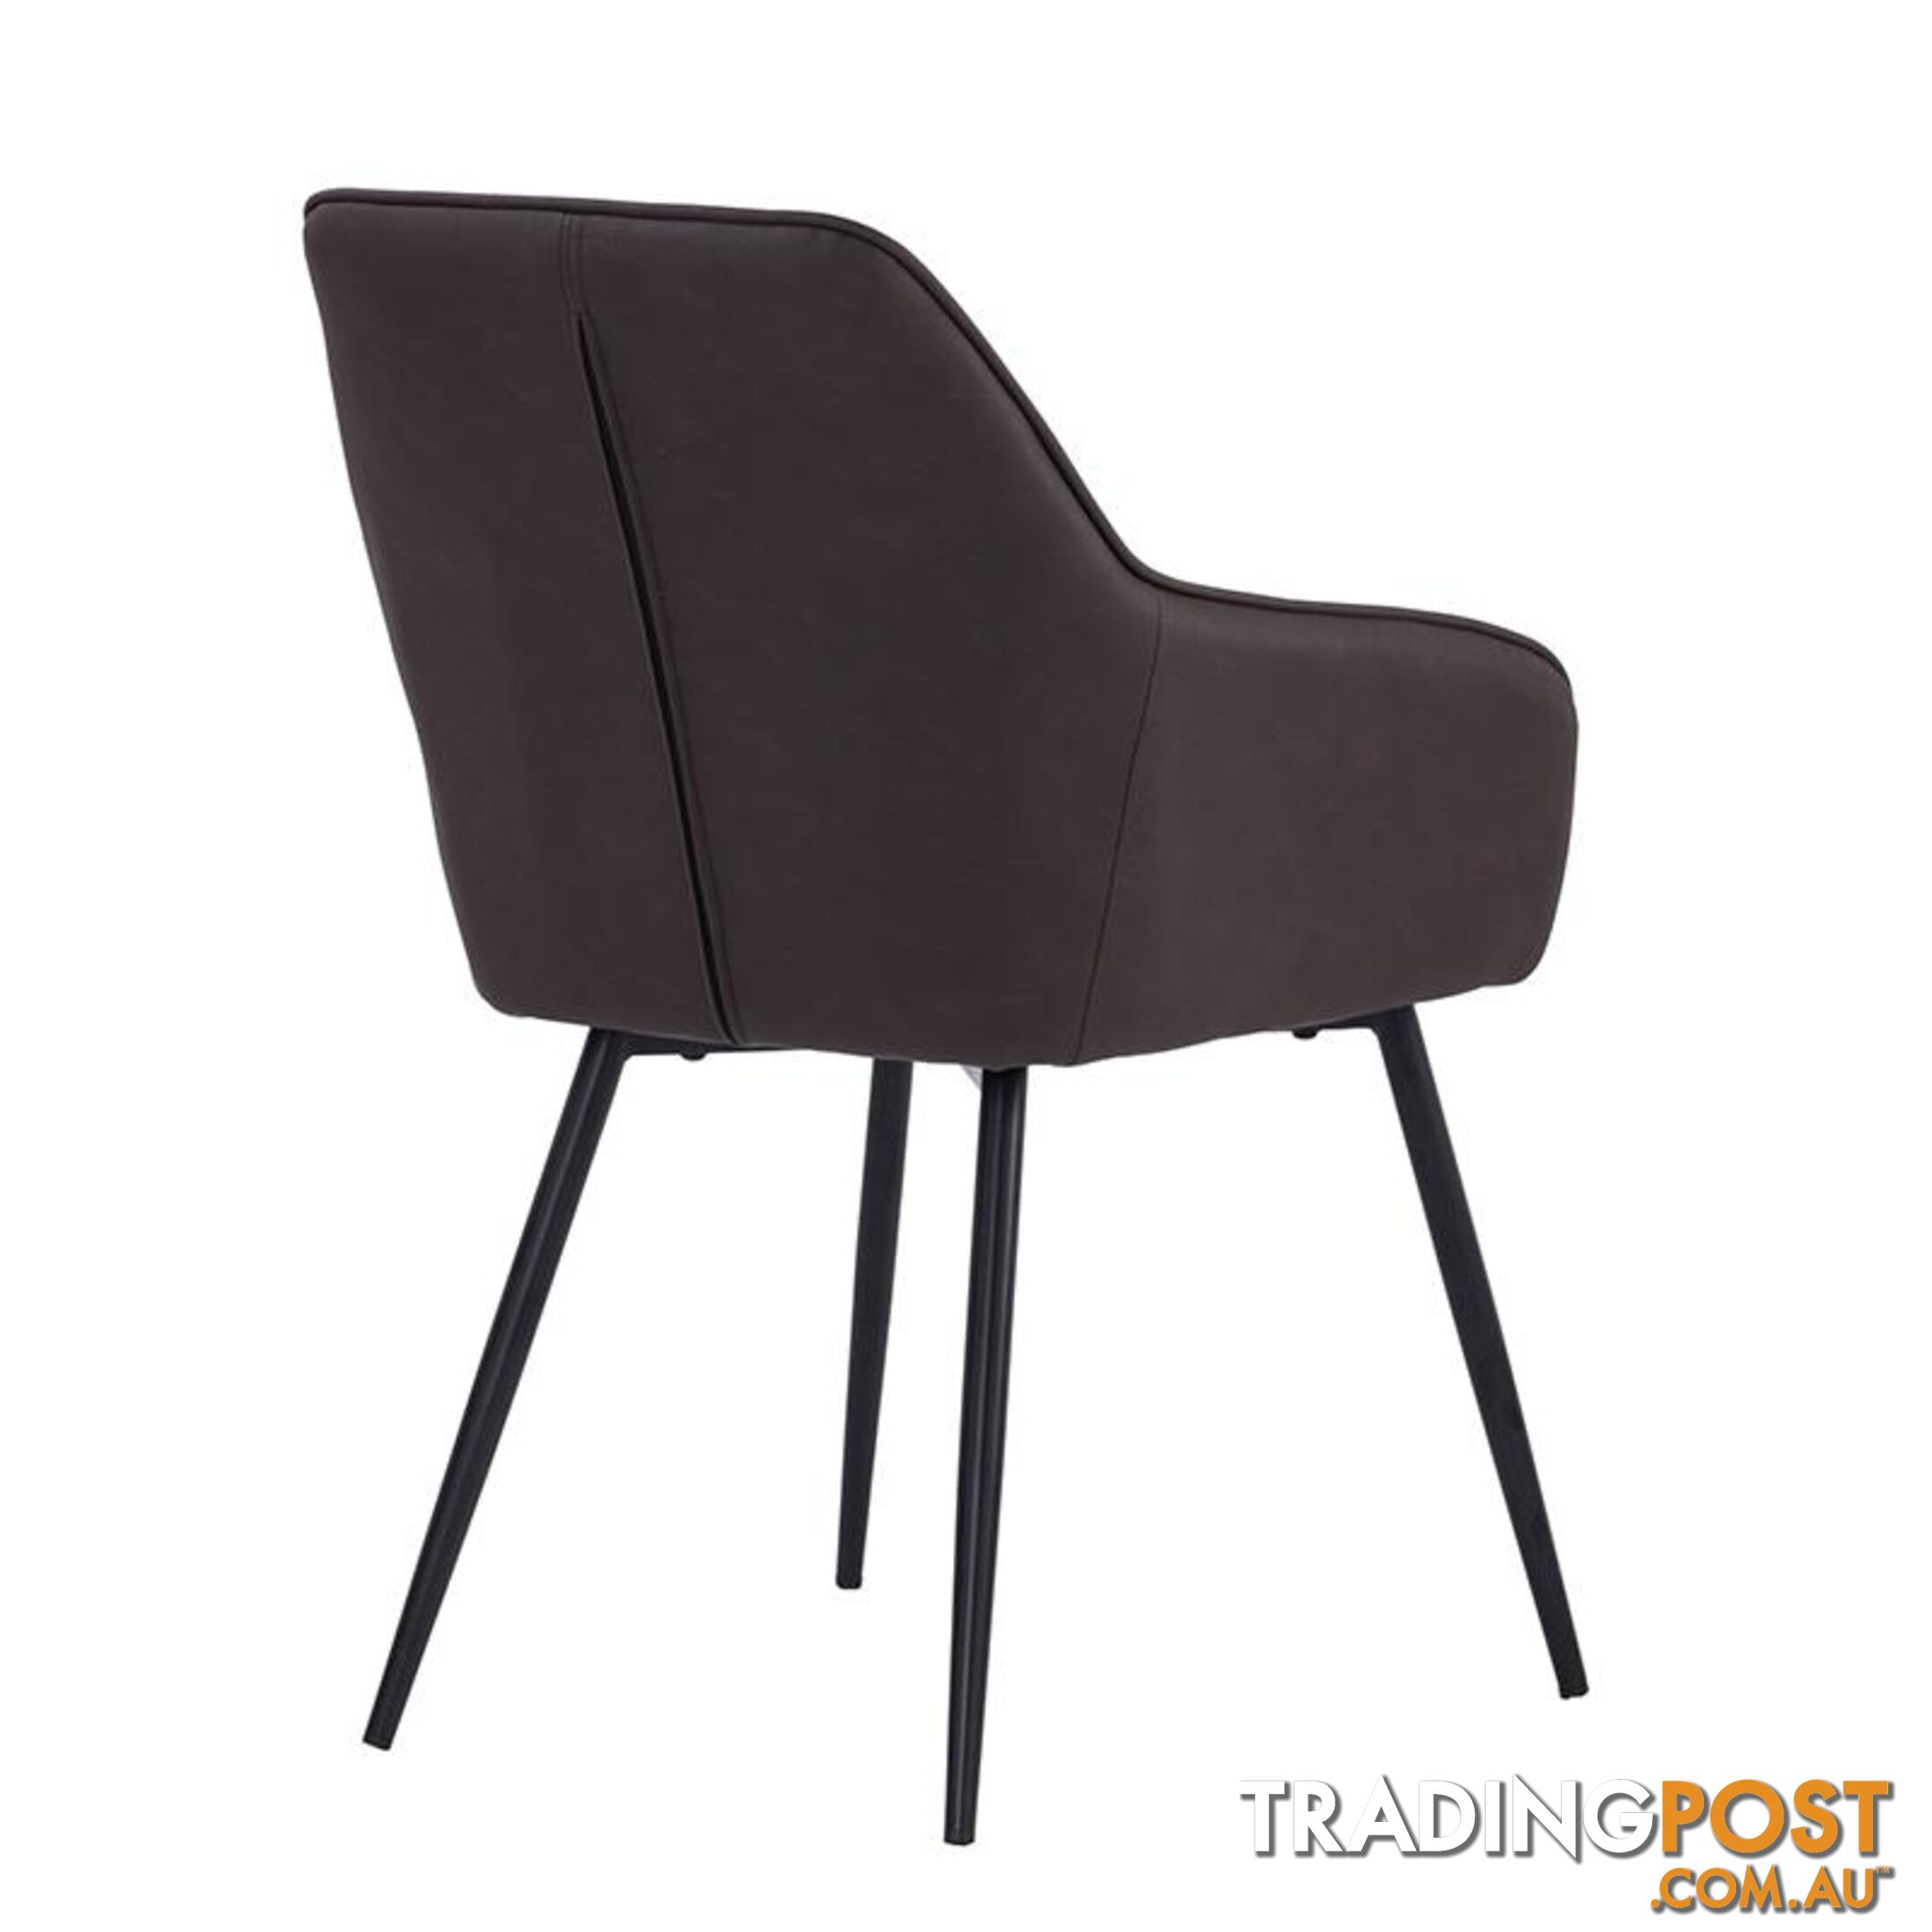 HAKON Dining Chair -  Brown & Black - 241248 - 9334719009698